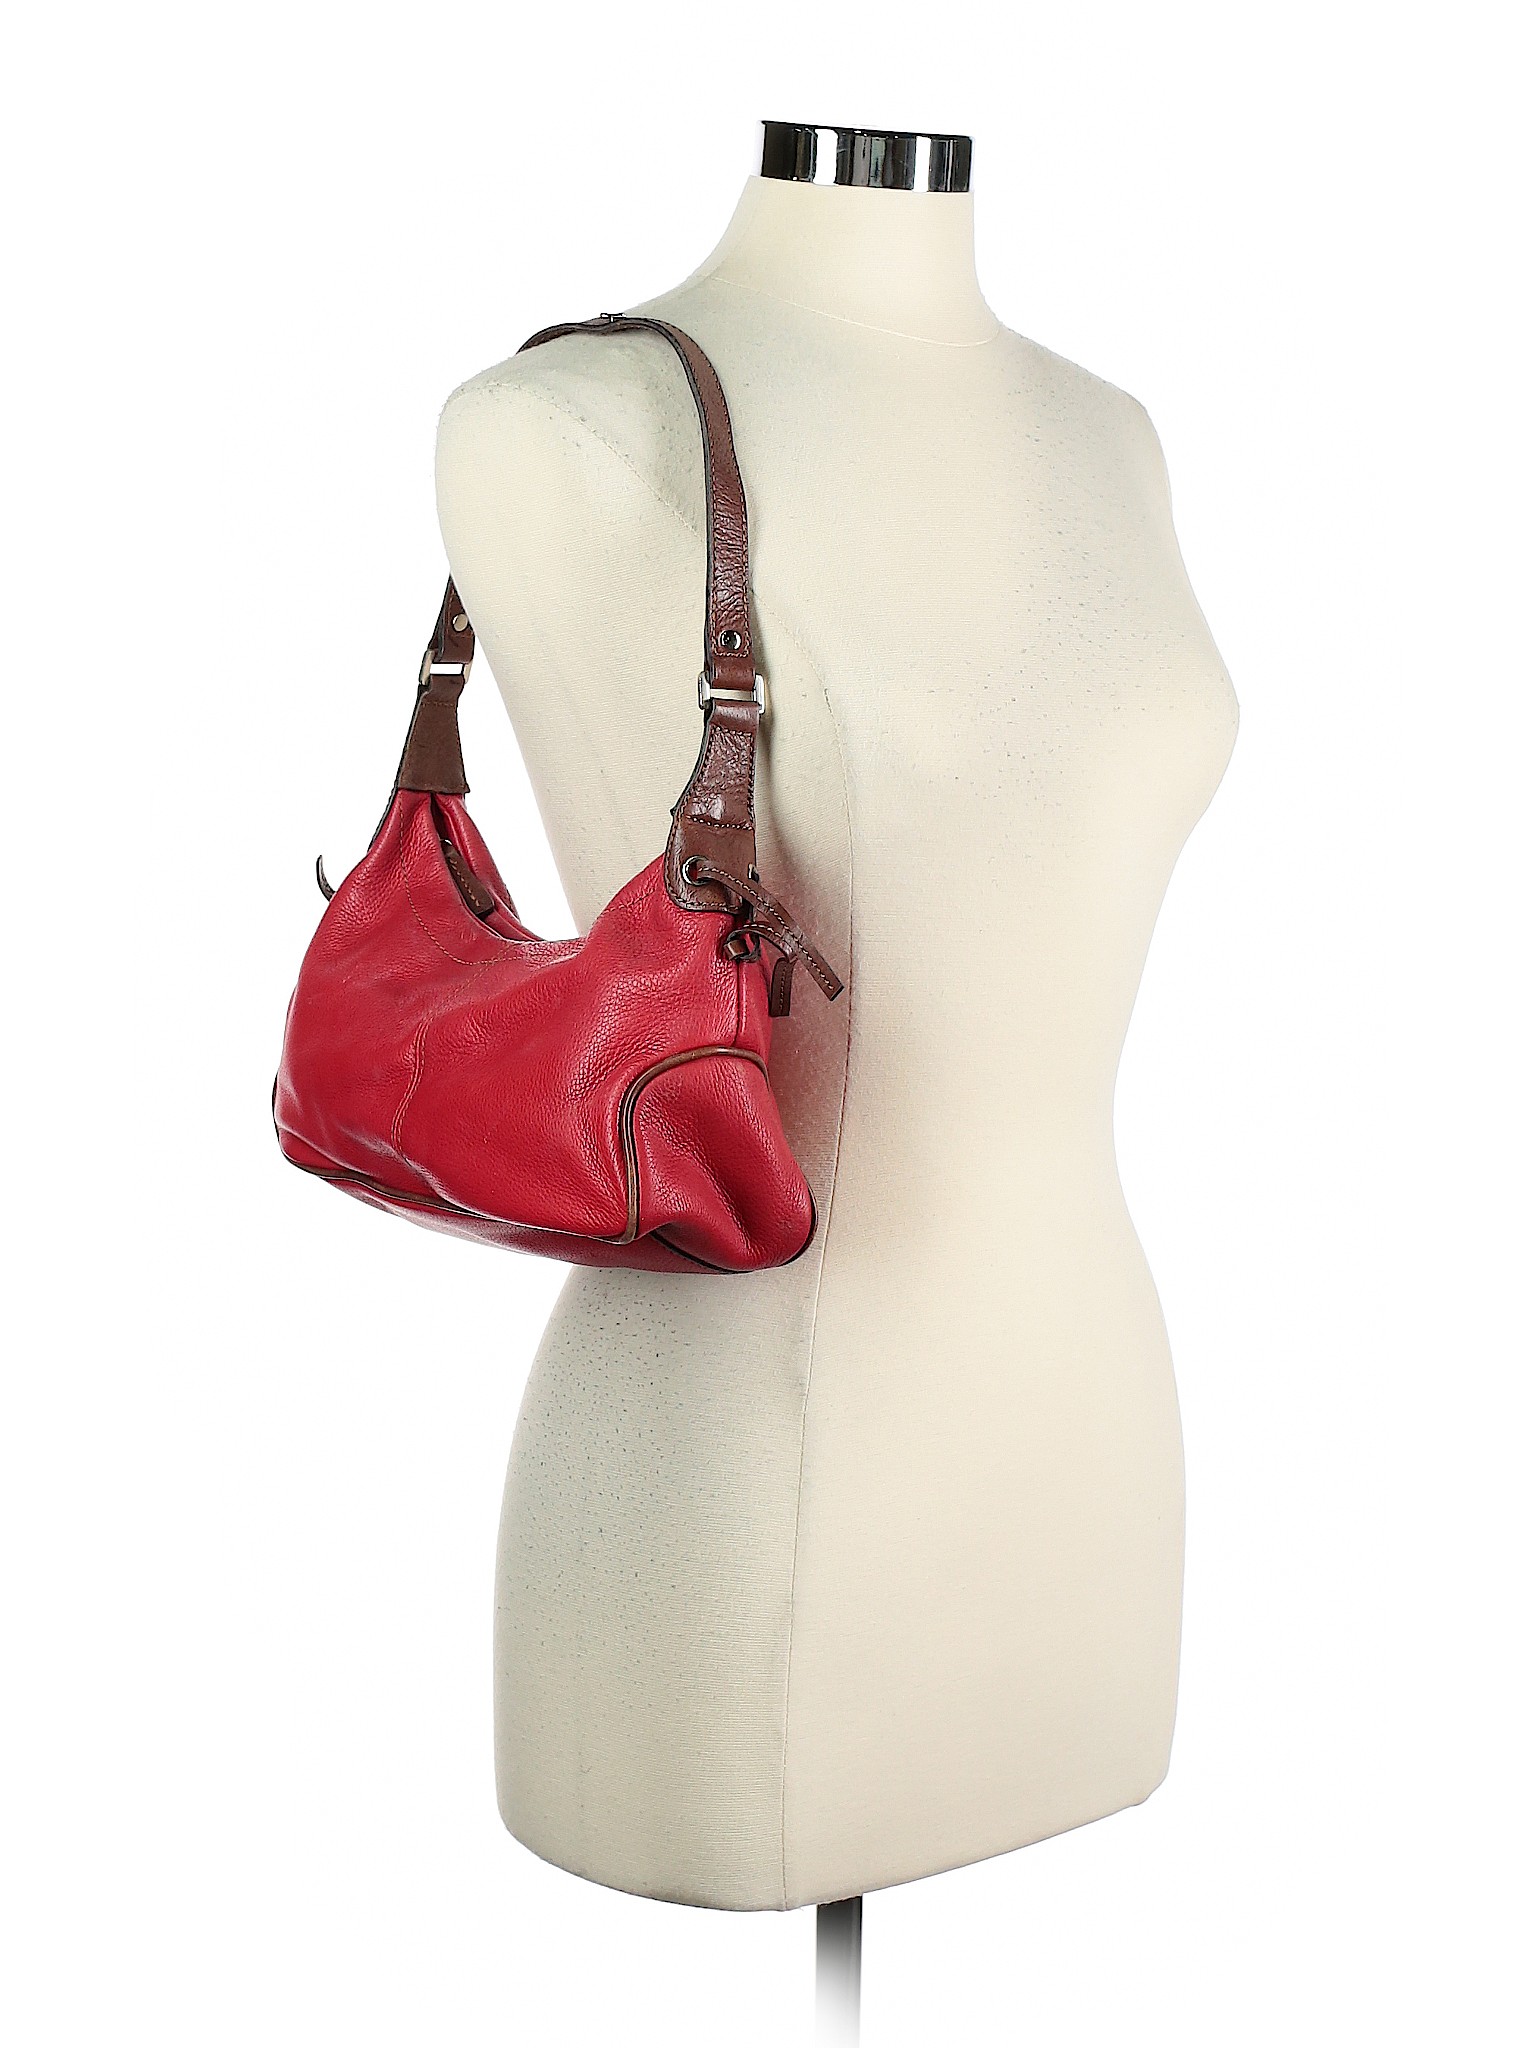 Fossil Women Red Leather Shoulder Bag One Size | eBay